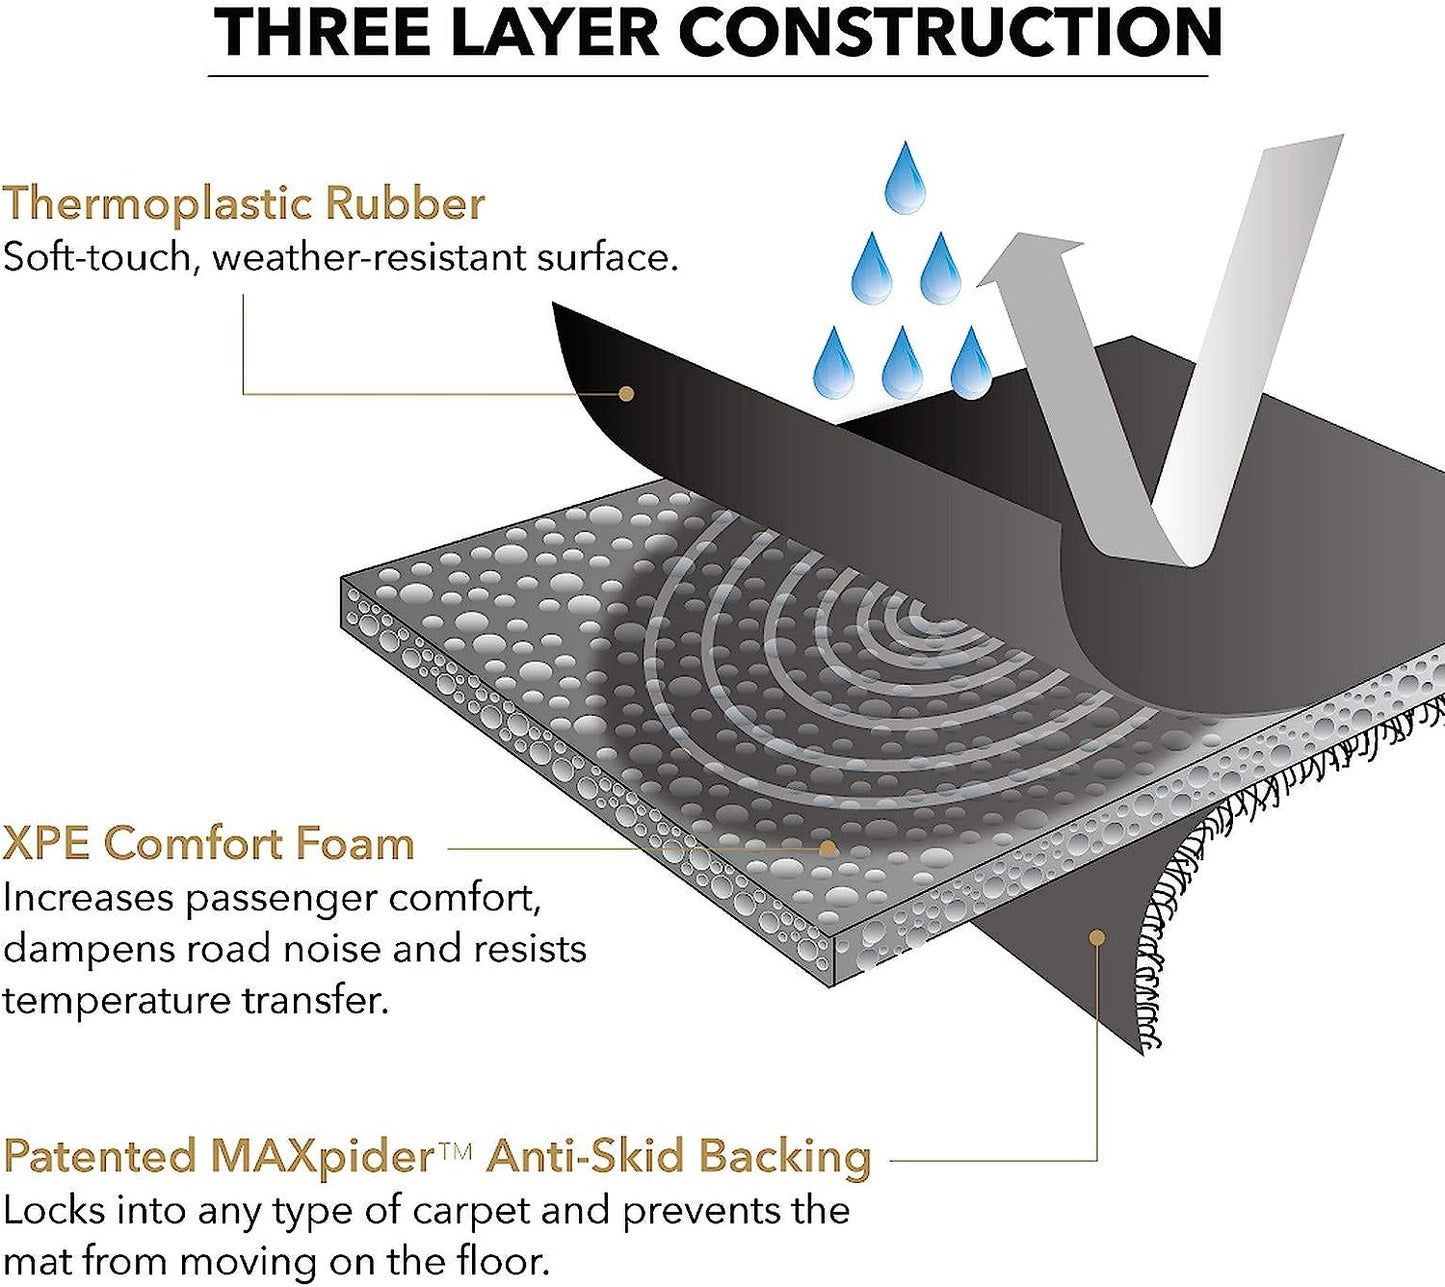 3D MAXpider Custom Fit Floor Liner Black for 2018-2021 HONDA CLARITY